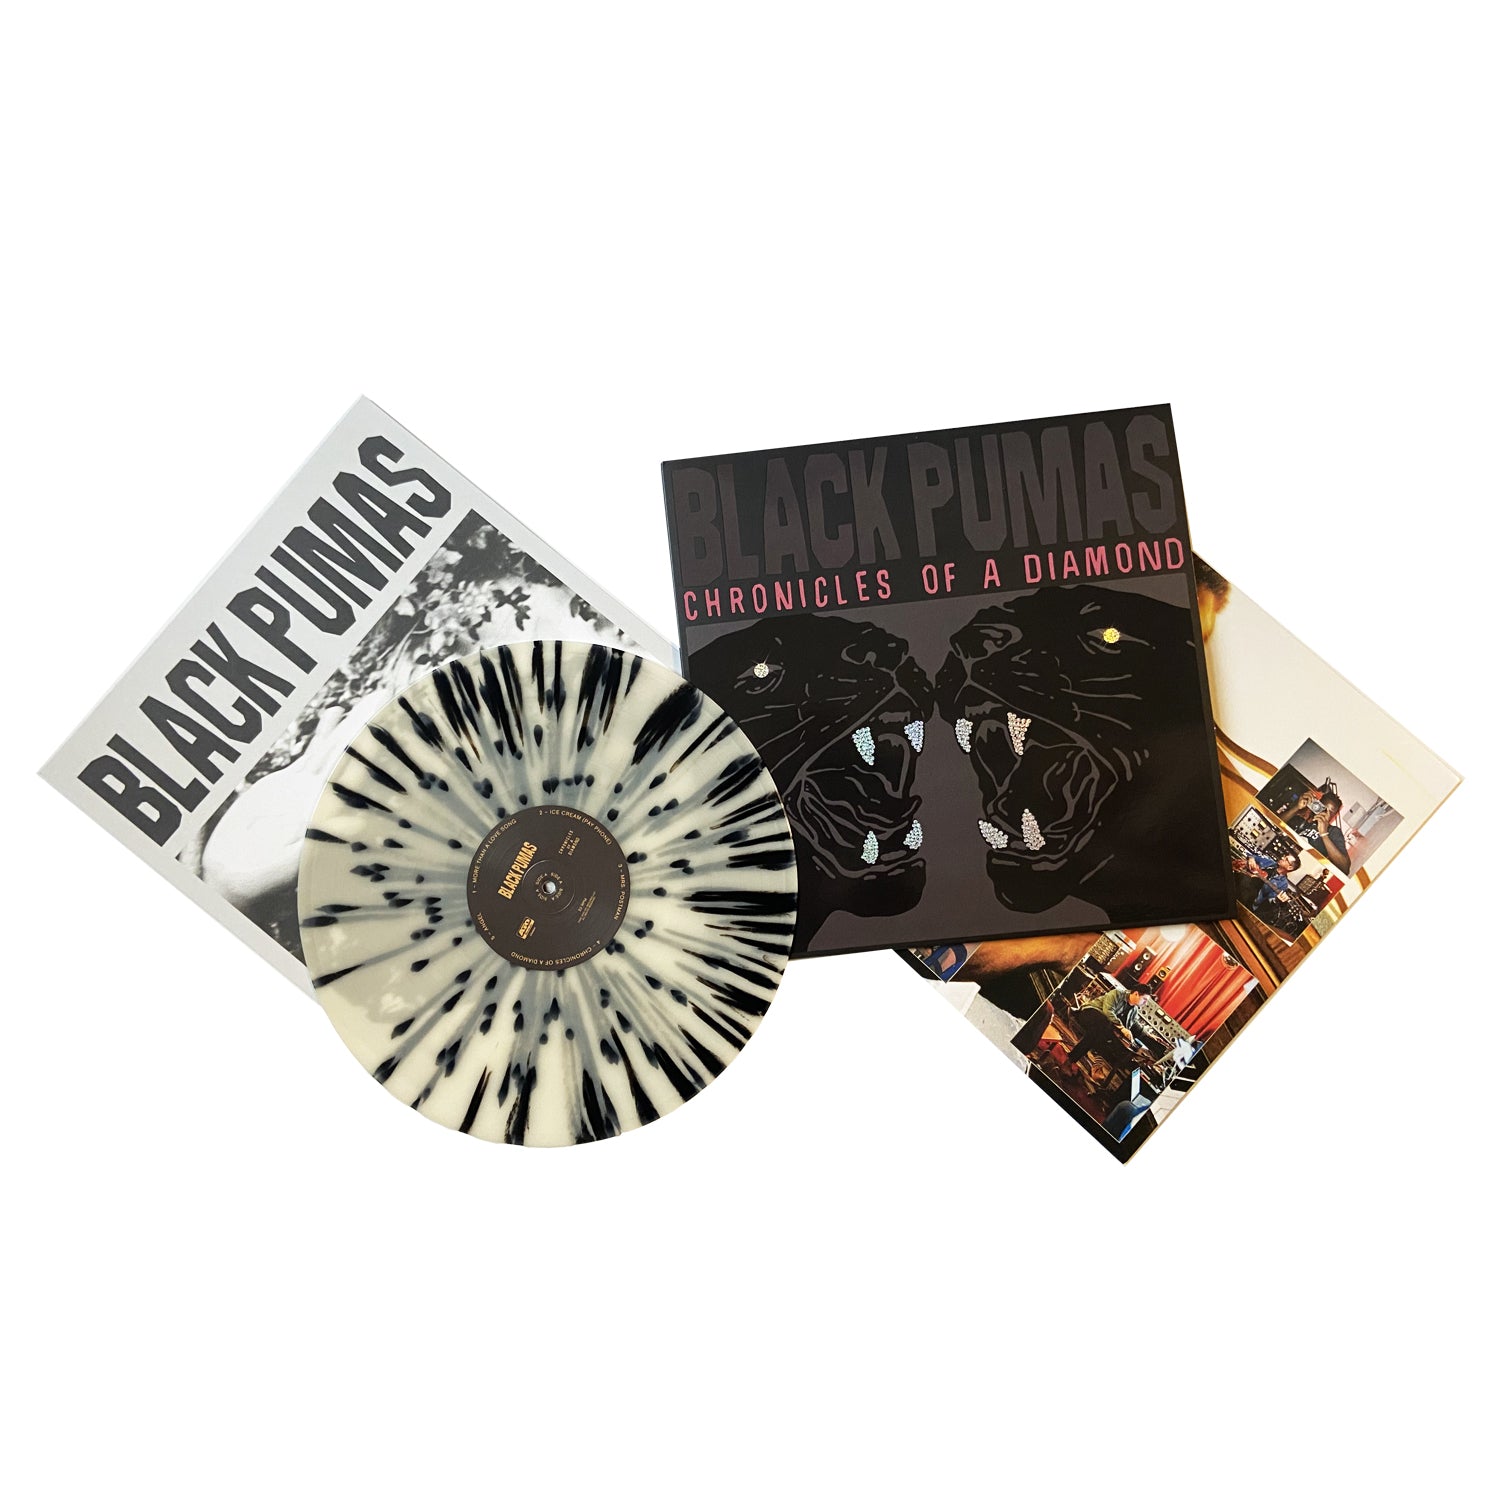 [DAMAGED] The Black Pumas - Chronicles Of A Diamond [Splatter Vinyl]